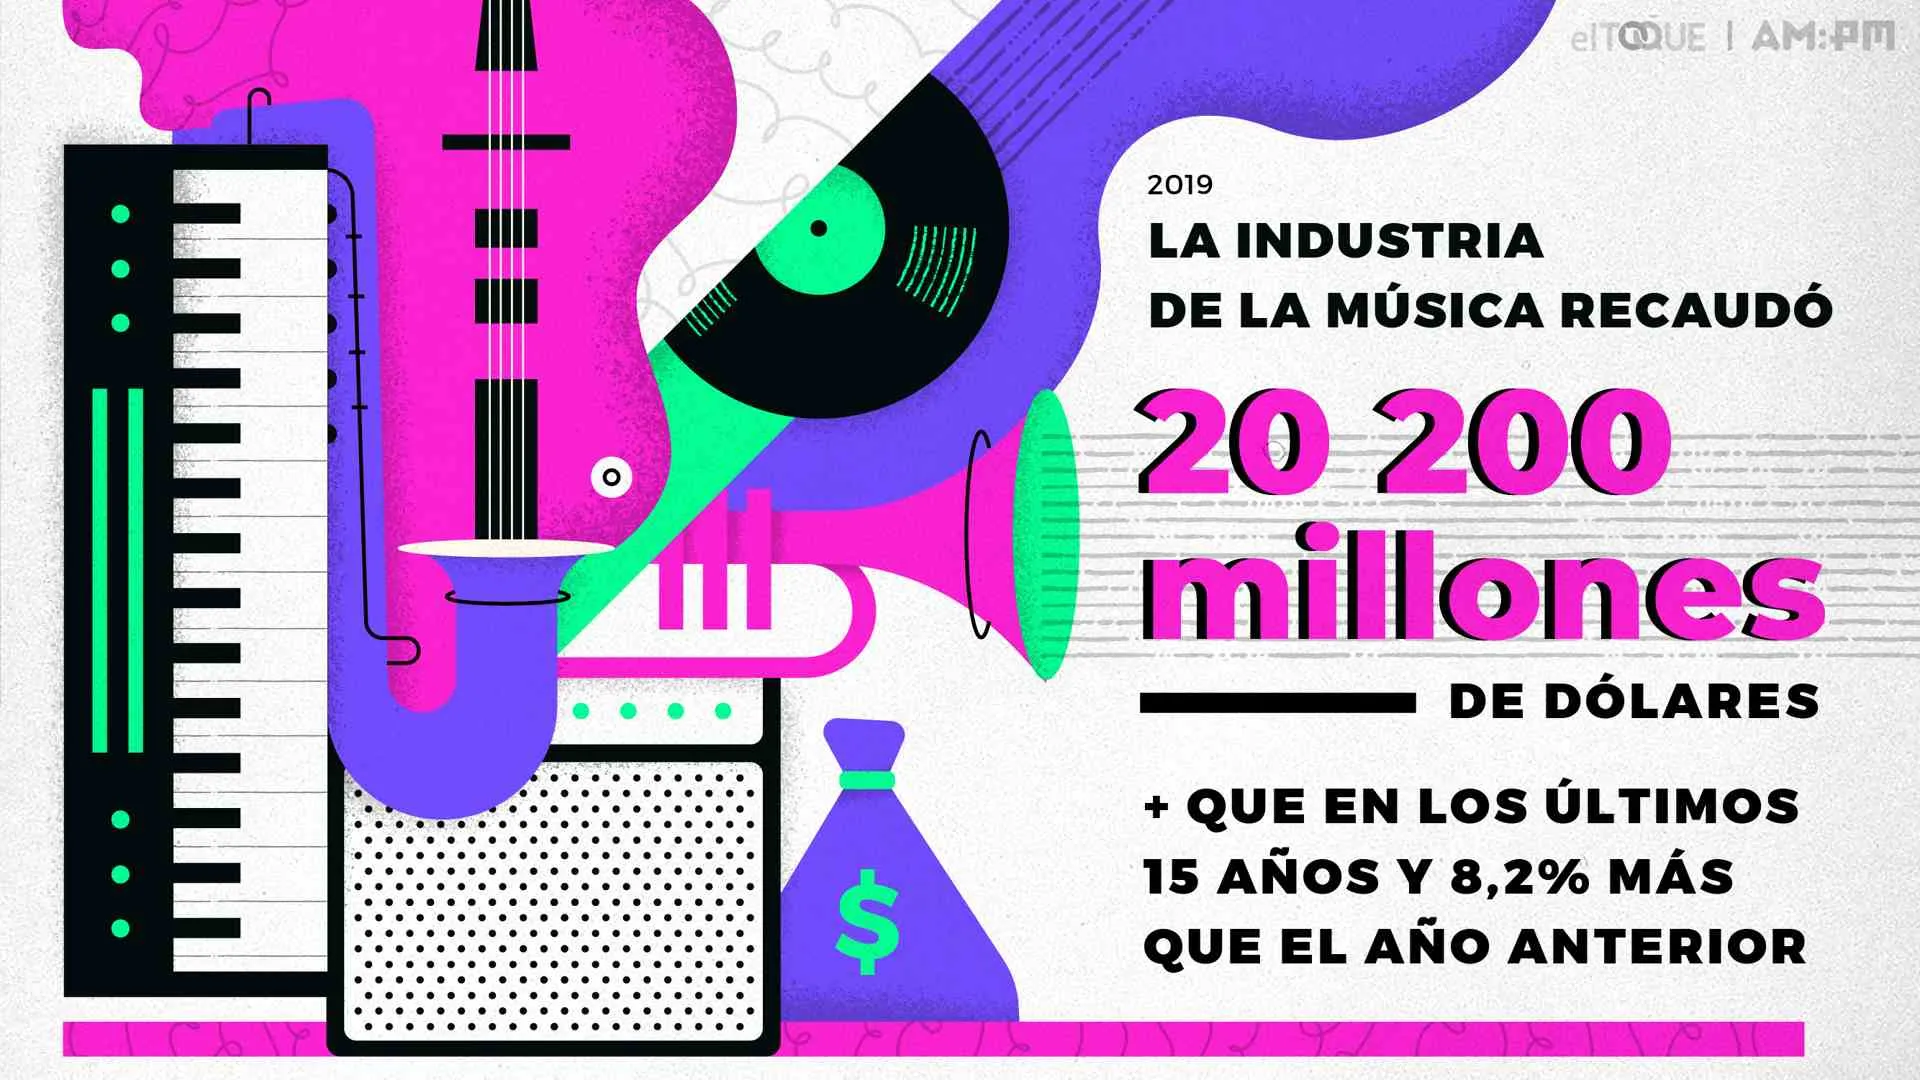 Music consumption and market in 2019 (in figures). Illustration: Janet Aguilar / AM:PM Magazine / El Toque.